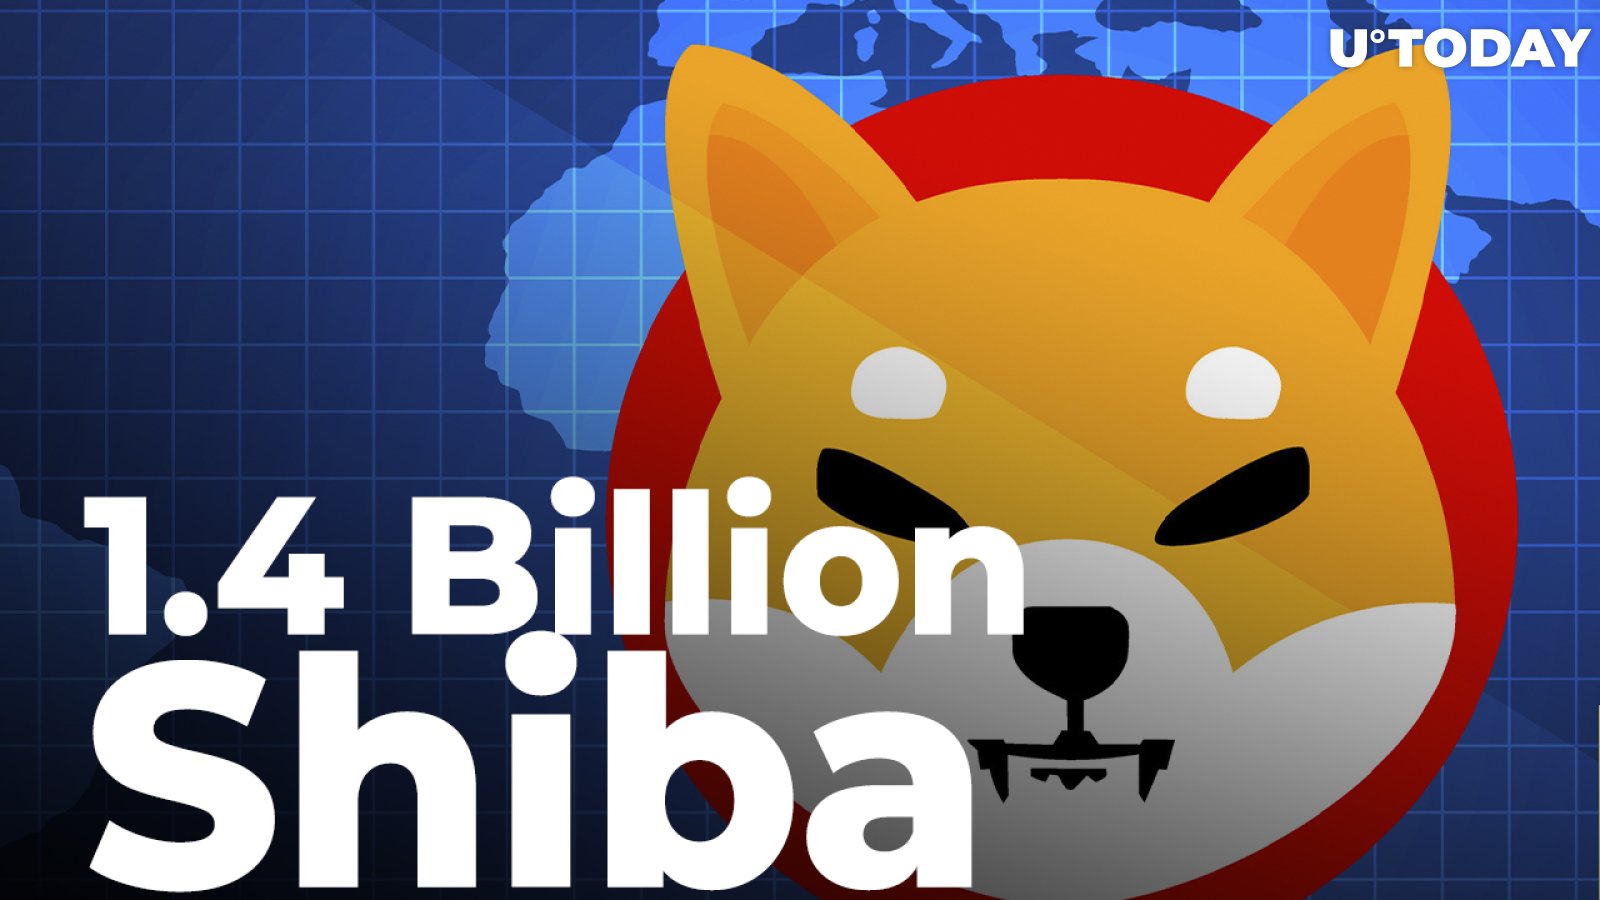 SHIB Army Burns 1.4 Billion Shiba, Removing 1 Billion in Single Transfer